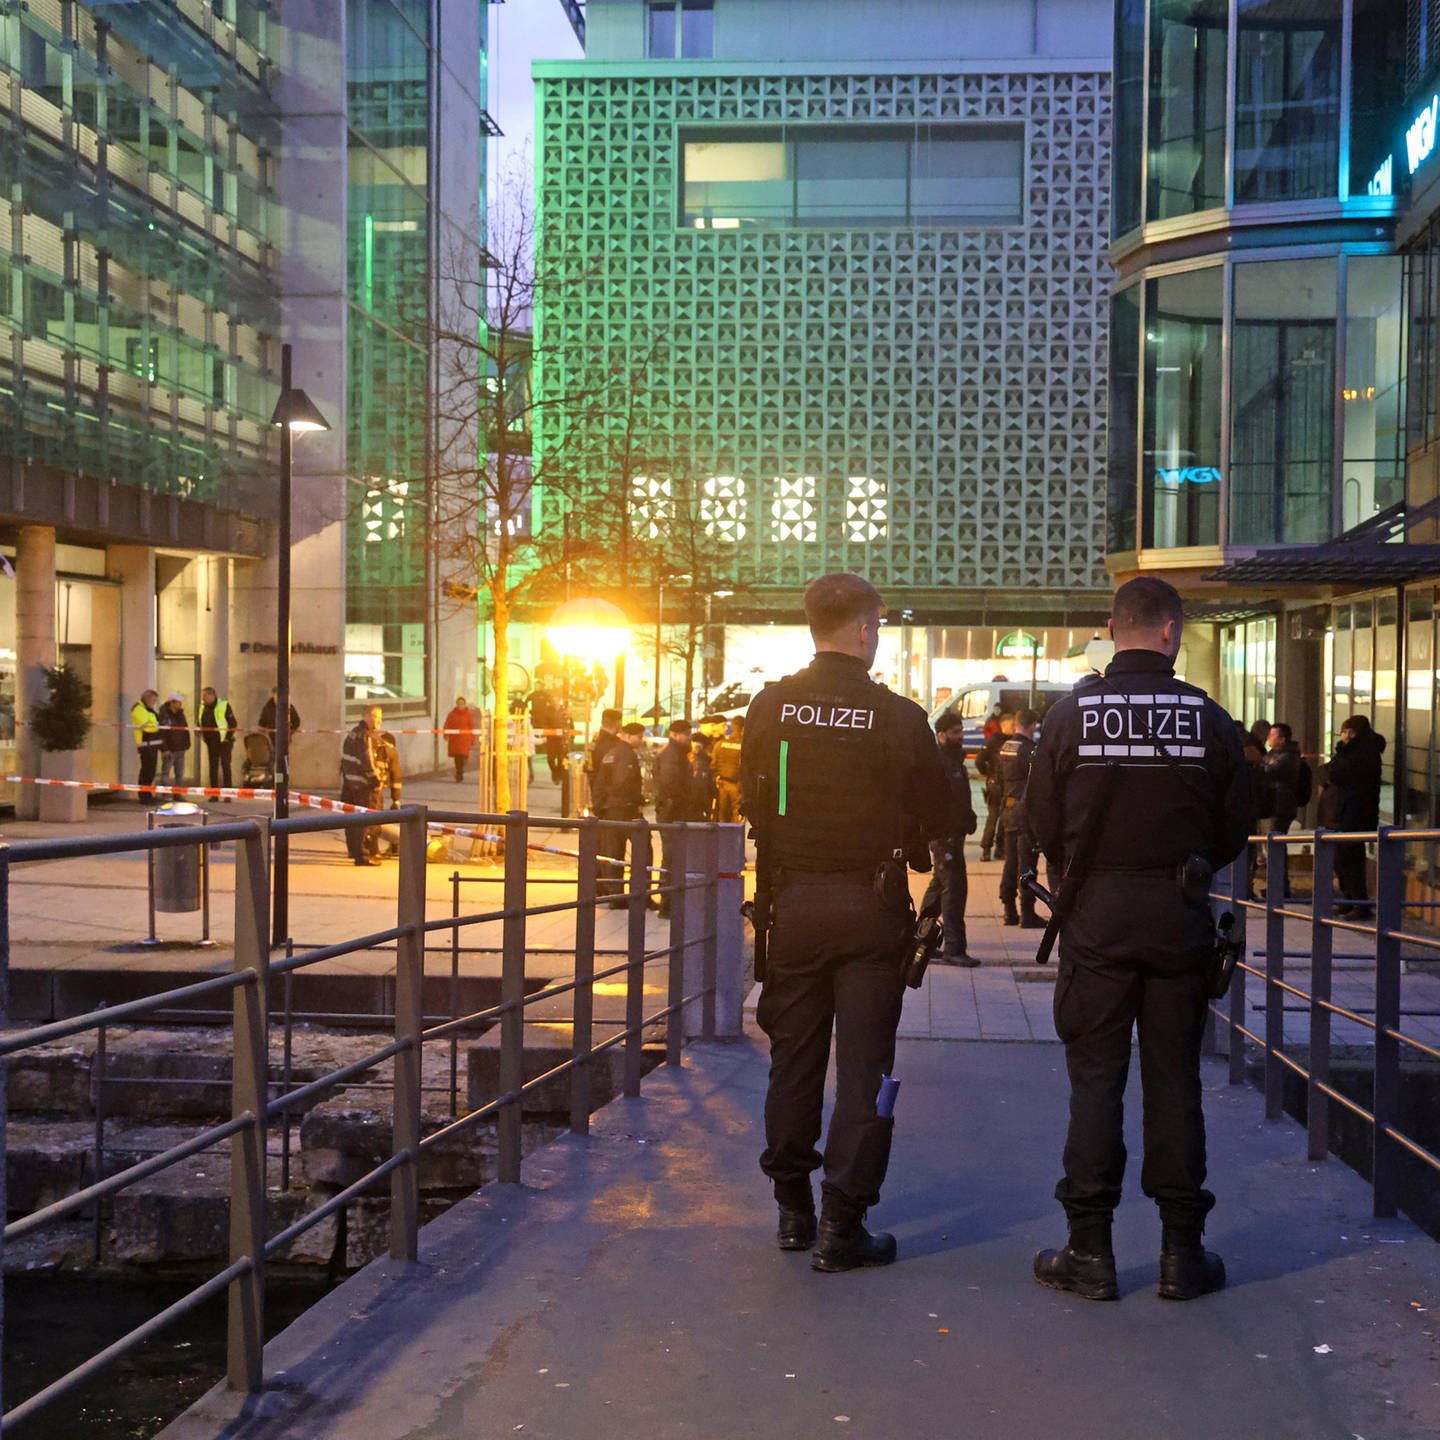 Drogen, 40 Platzverweise: Polizei Ulm zieht nach Razzia Bilanz - SWR Aktuell